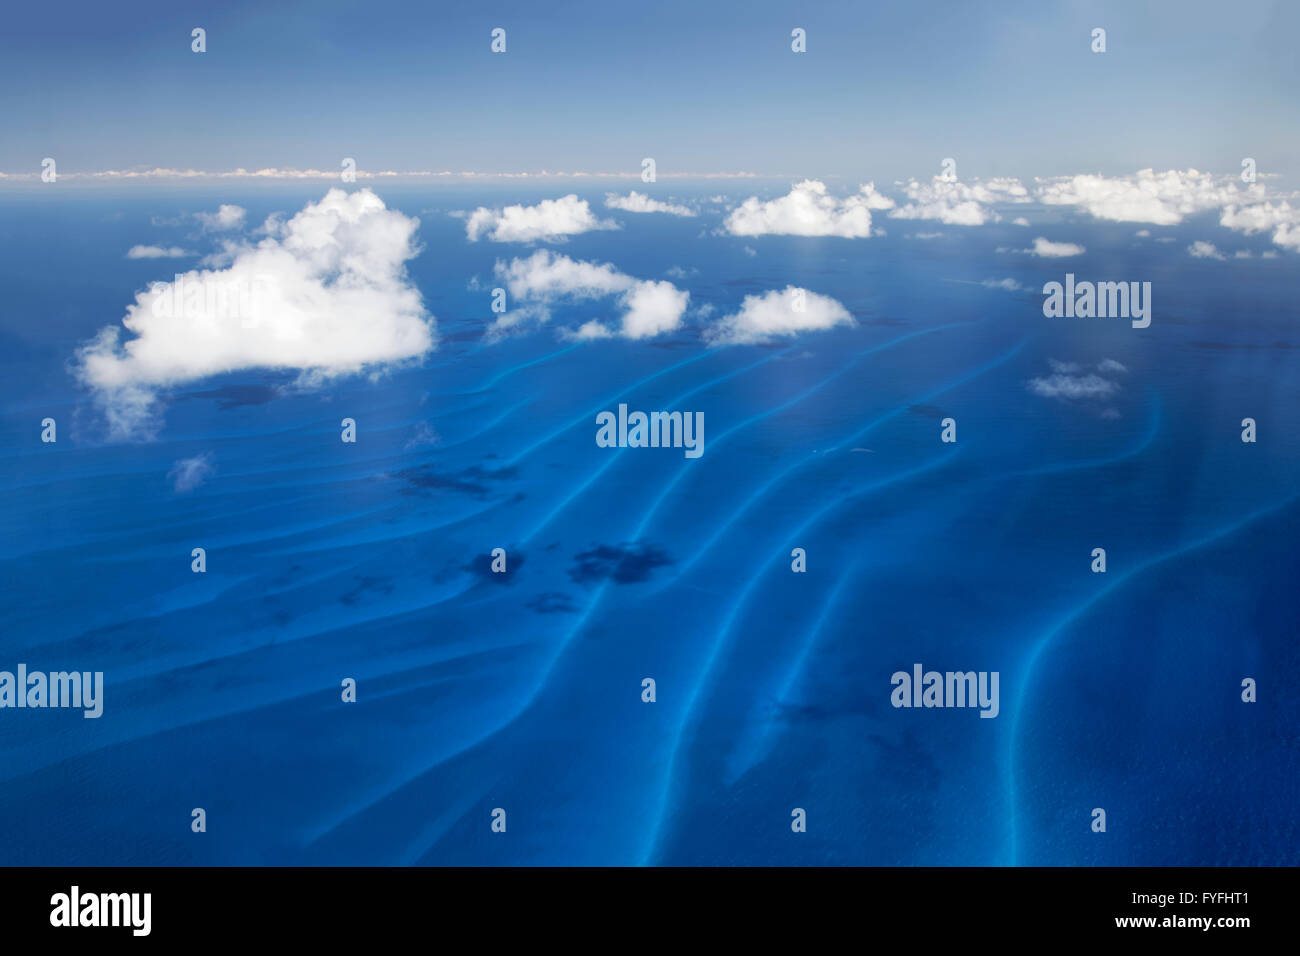 Sandbanks in the sea, small clouds over the Pacific, Queensland, Australia Stock Photo